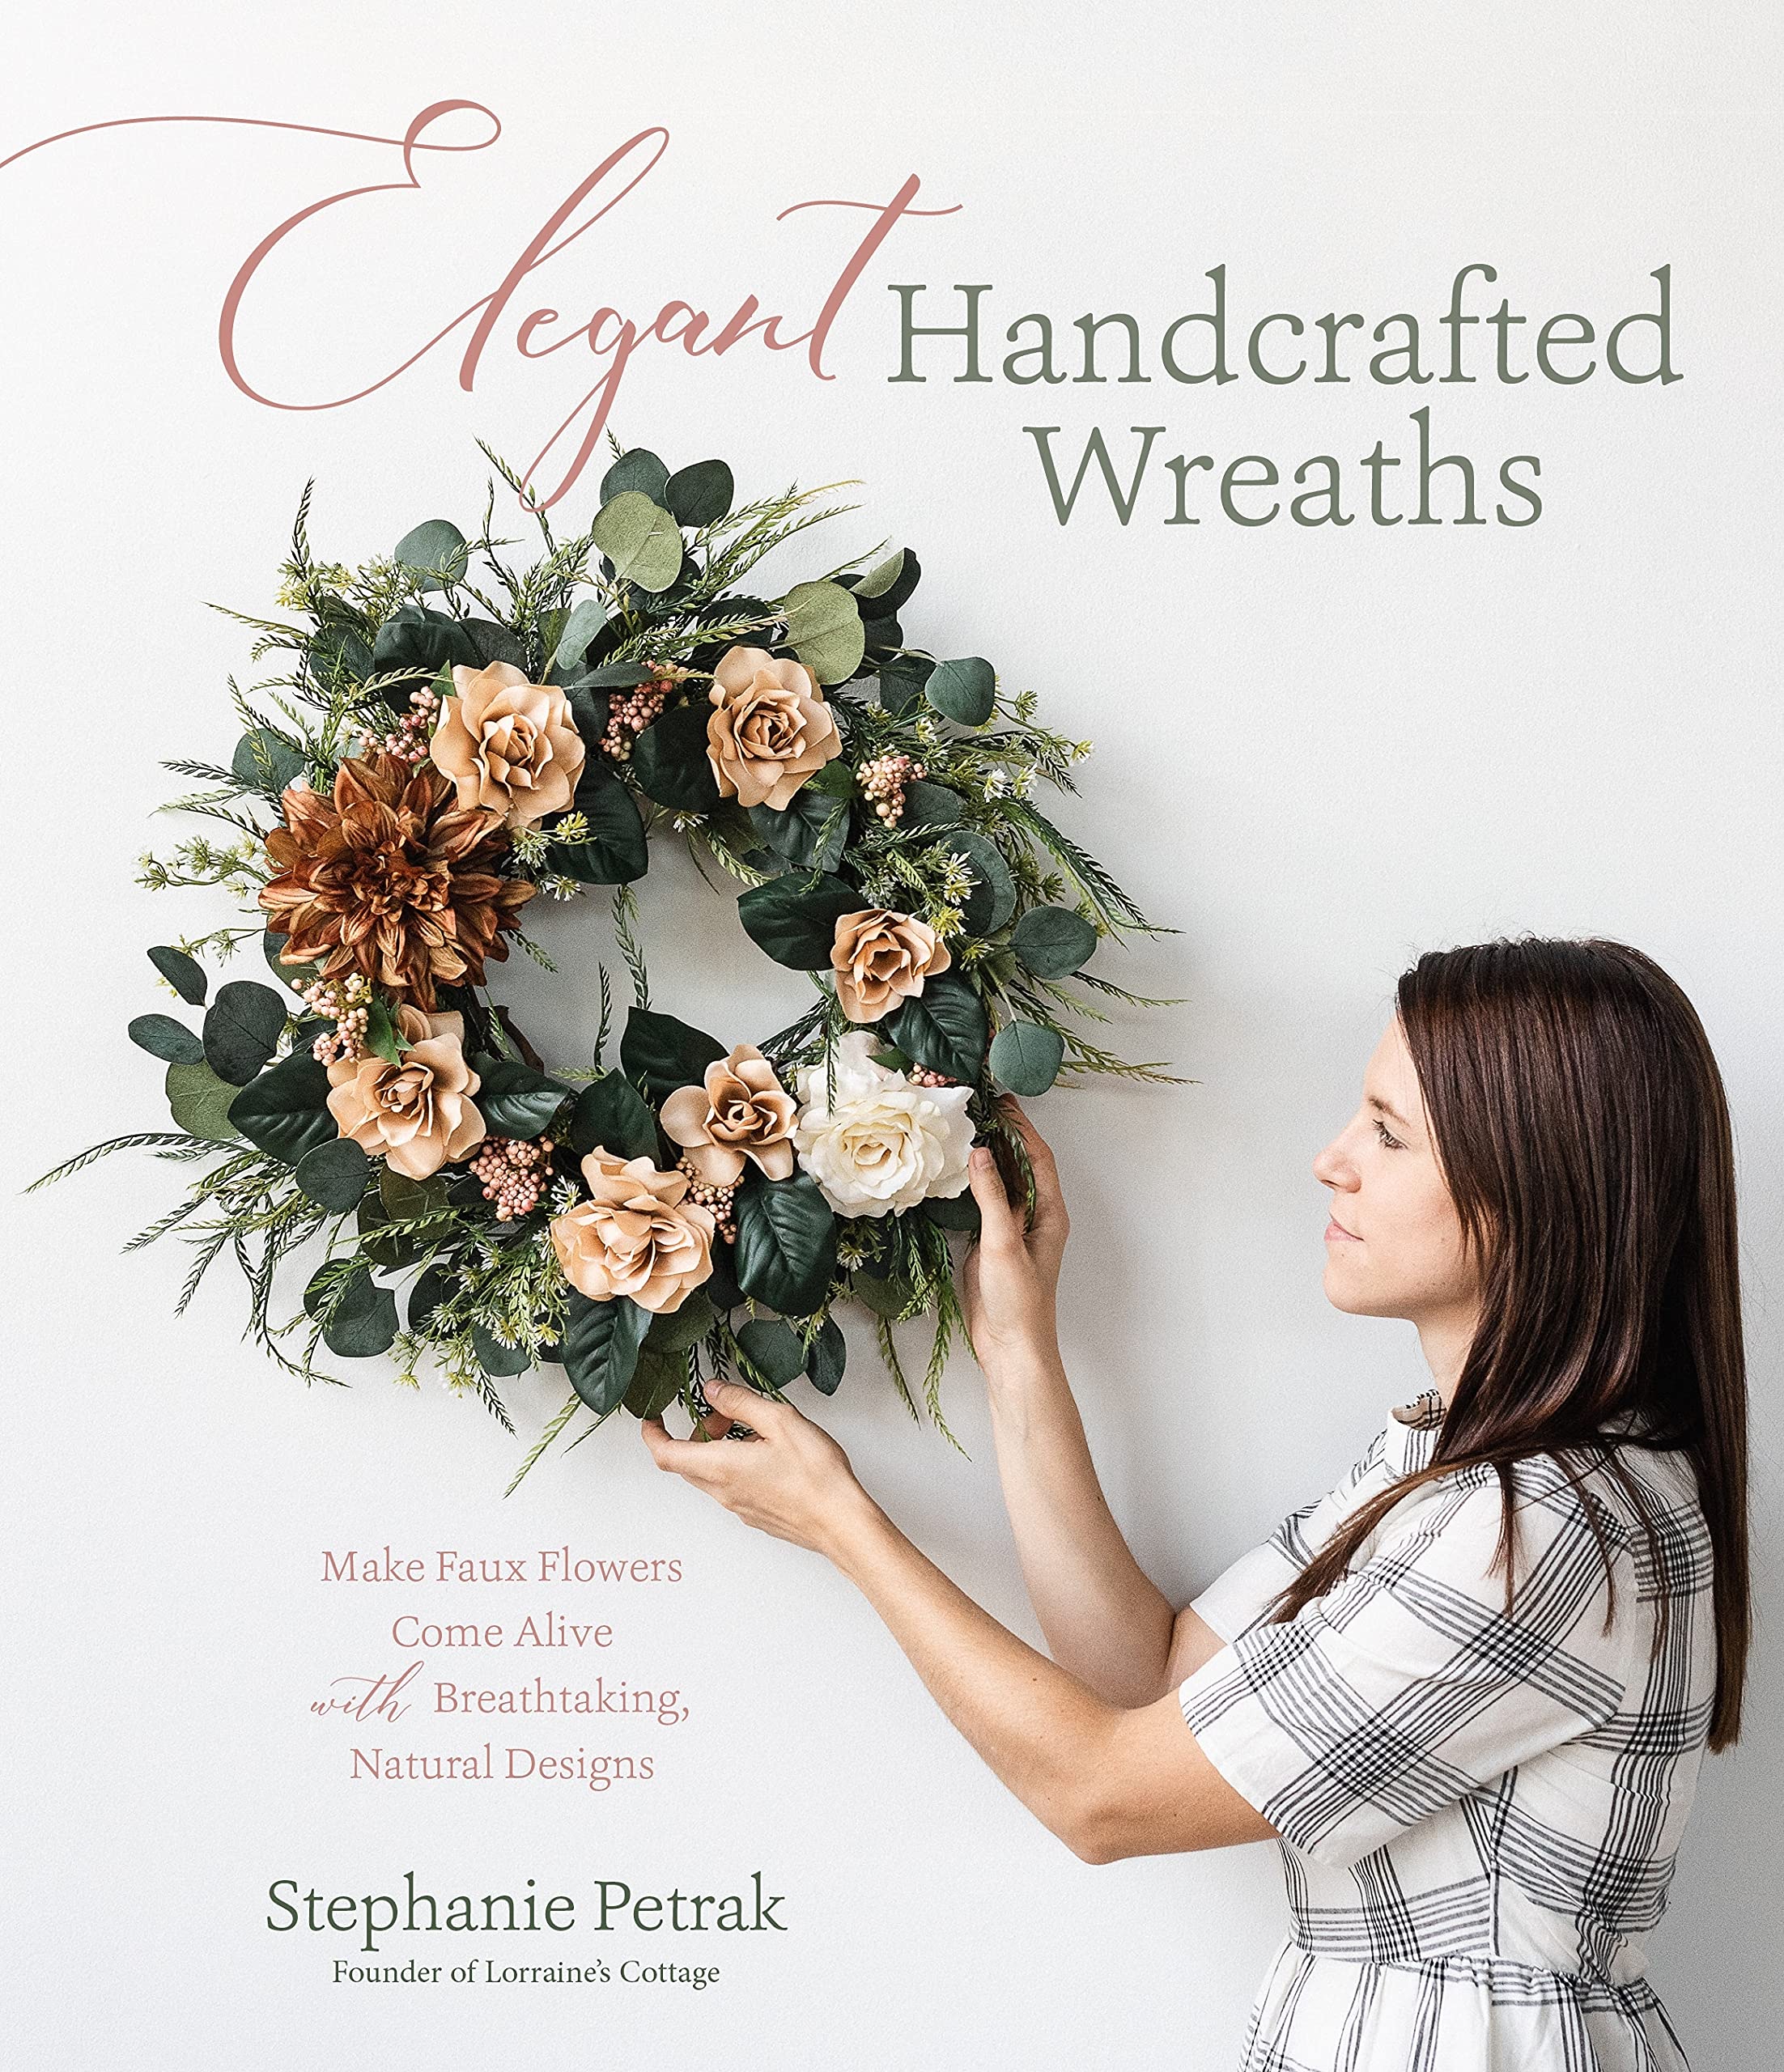 Image for "Elegant Handcrafted Wreaths"